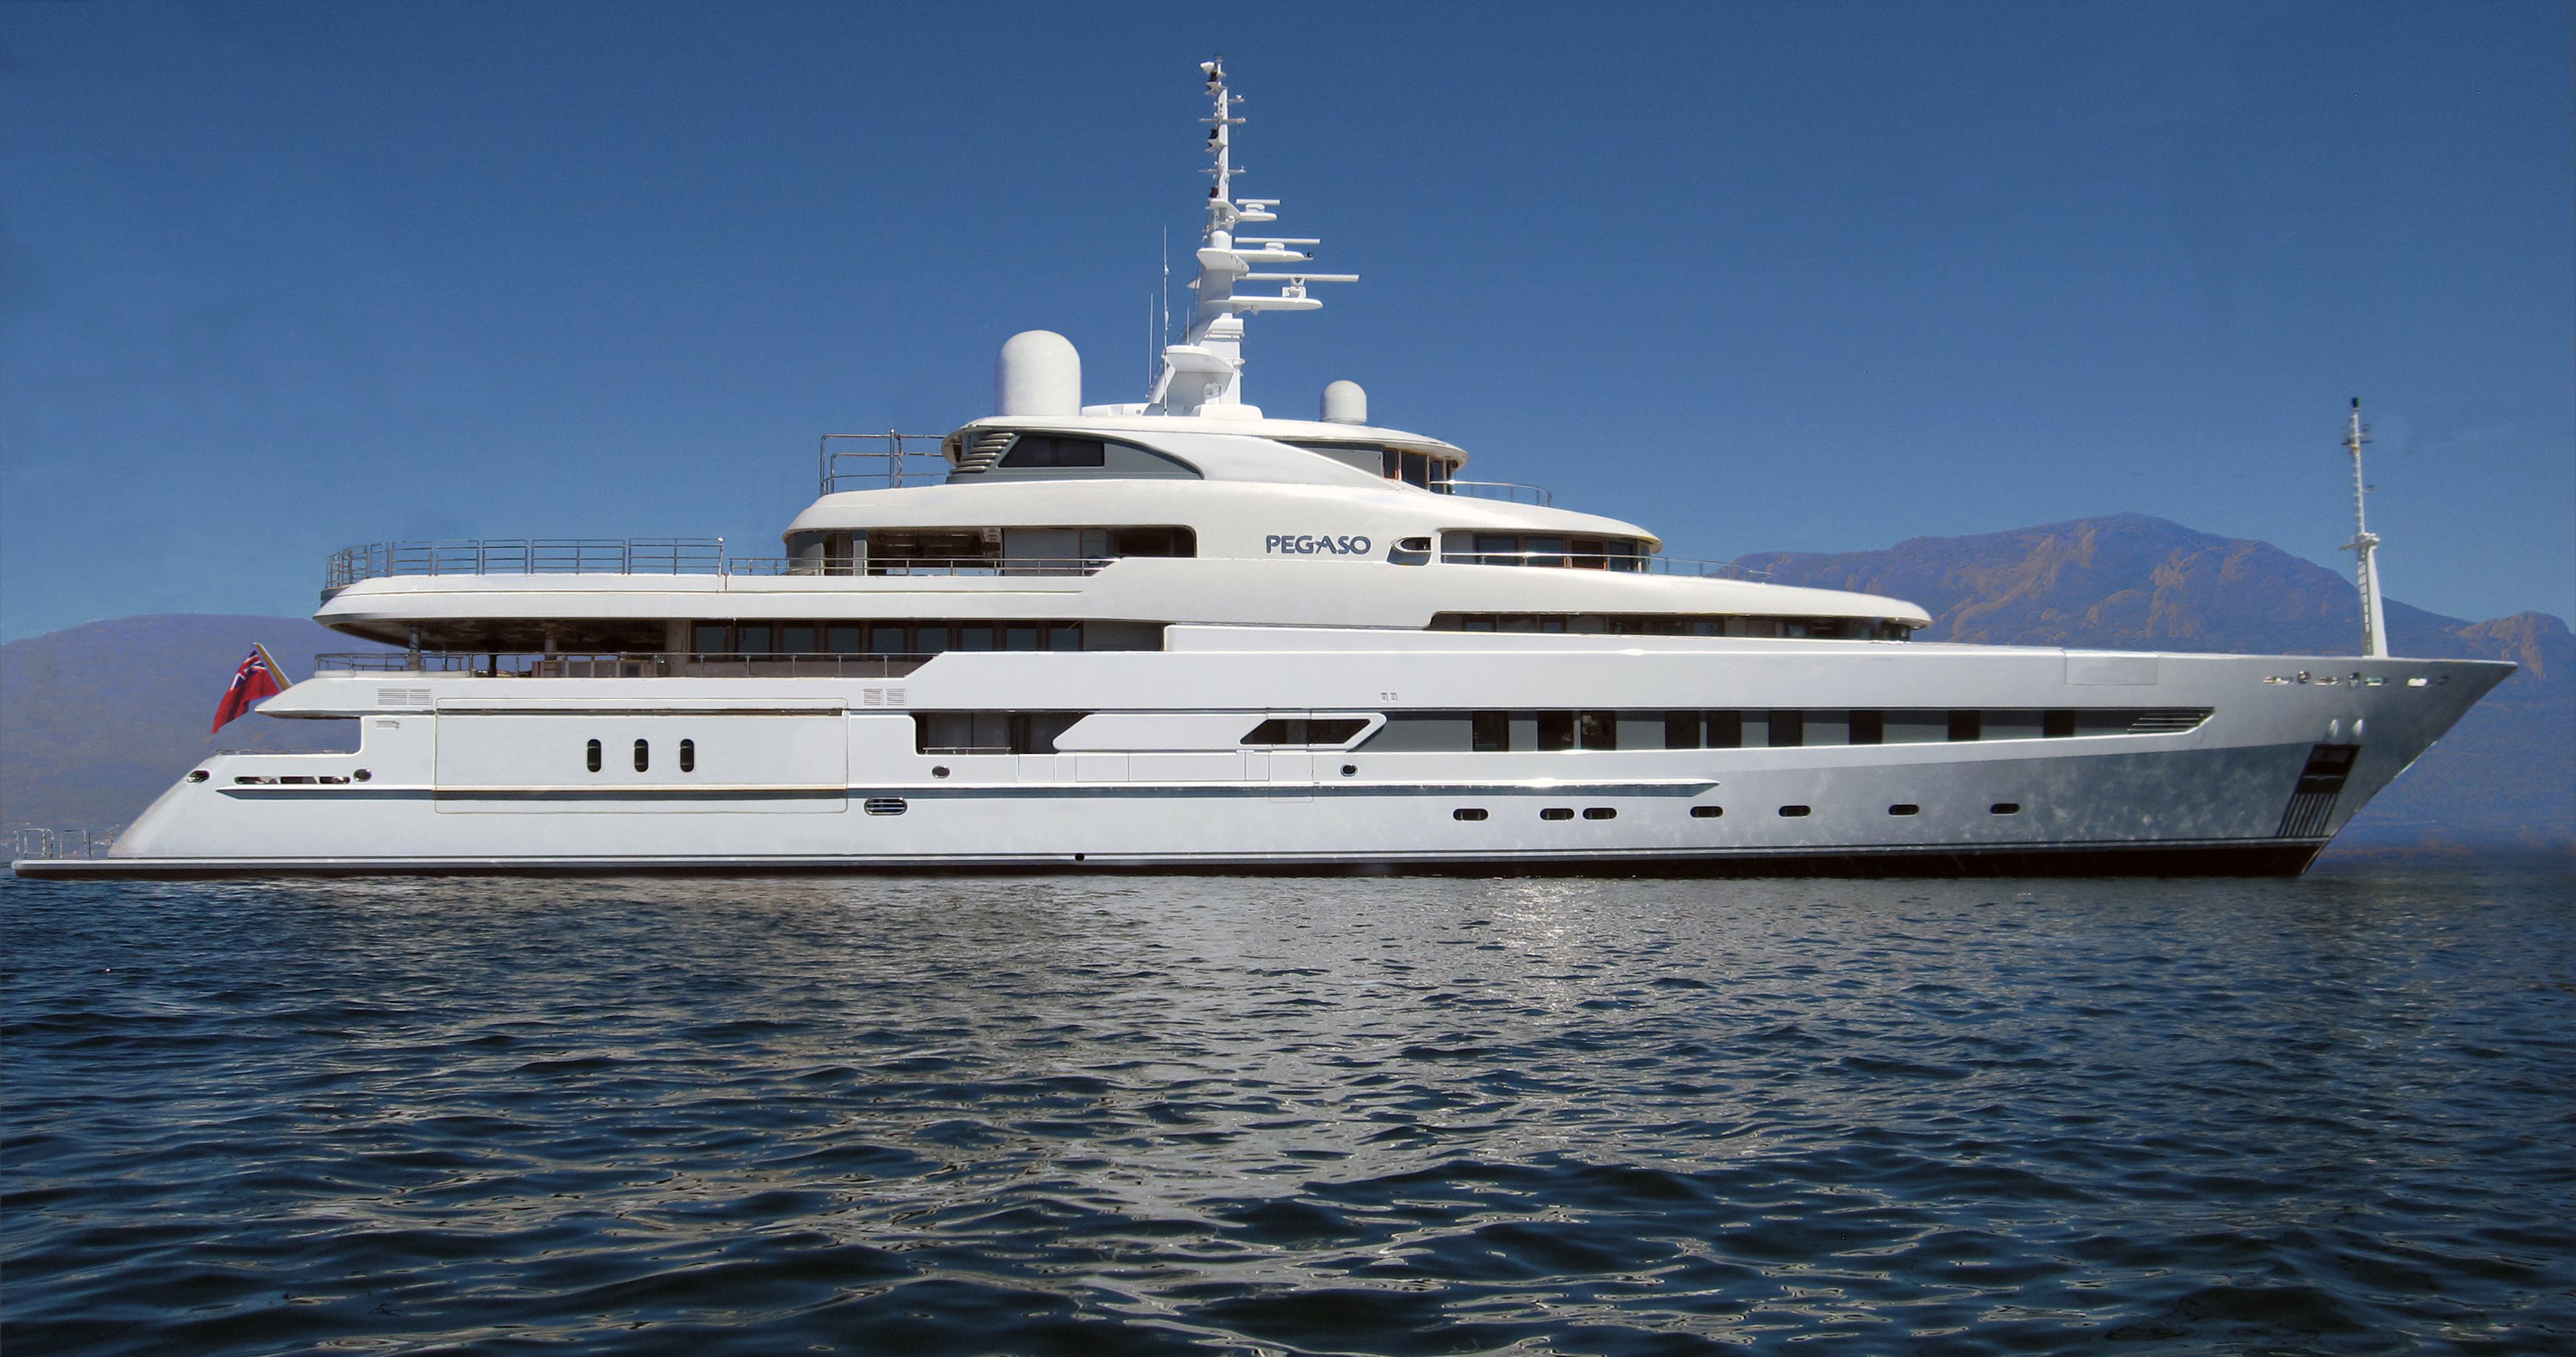 73m luxury motor yacht PEGASO — Yacht Charter & Superyacht News